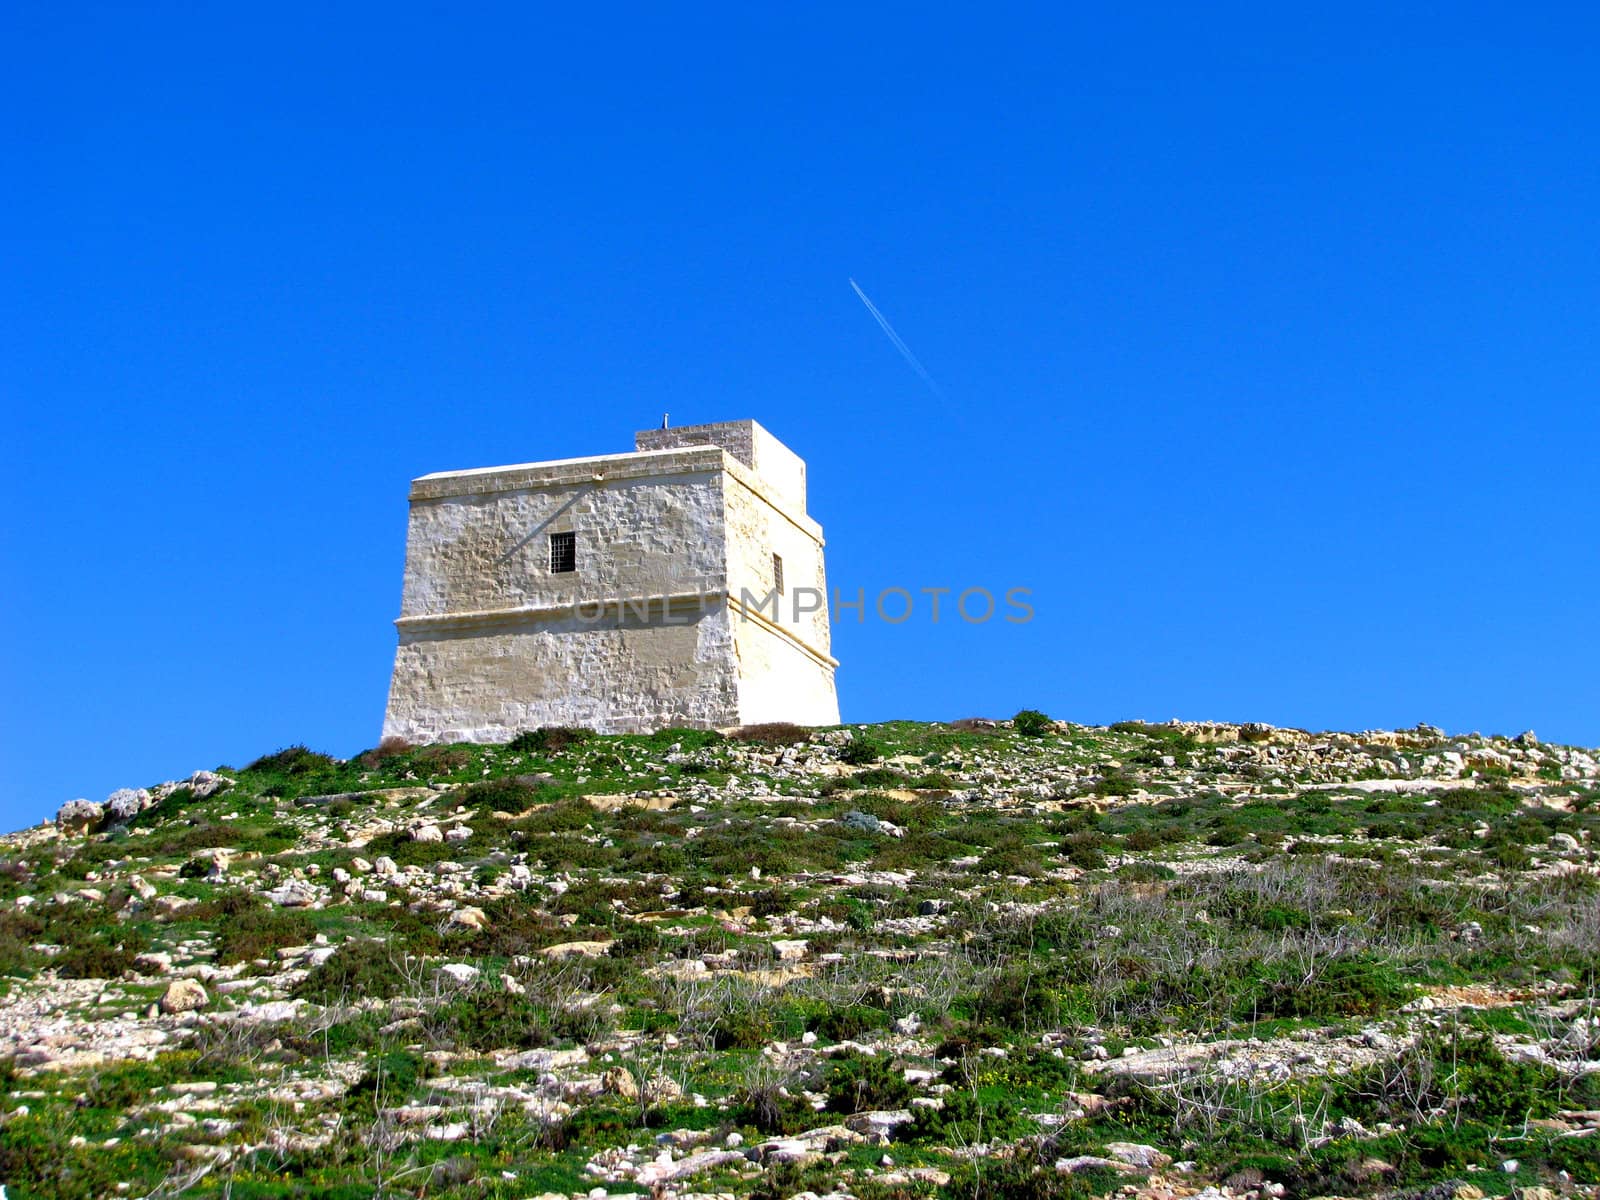 The Watch Tower overlooking the bay in Dwejra Gozo - Malta.